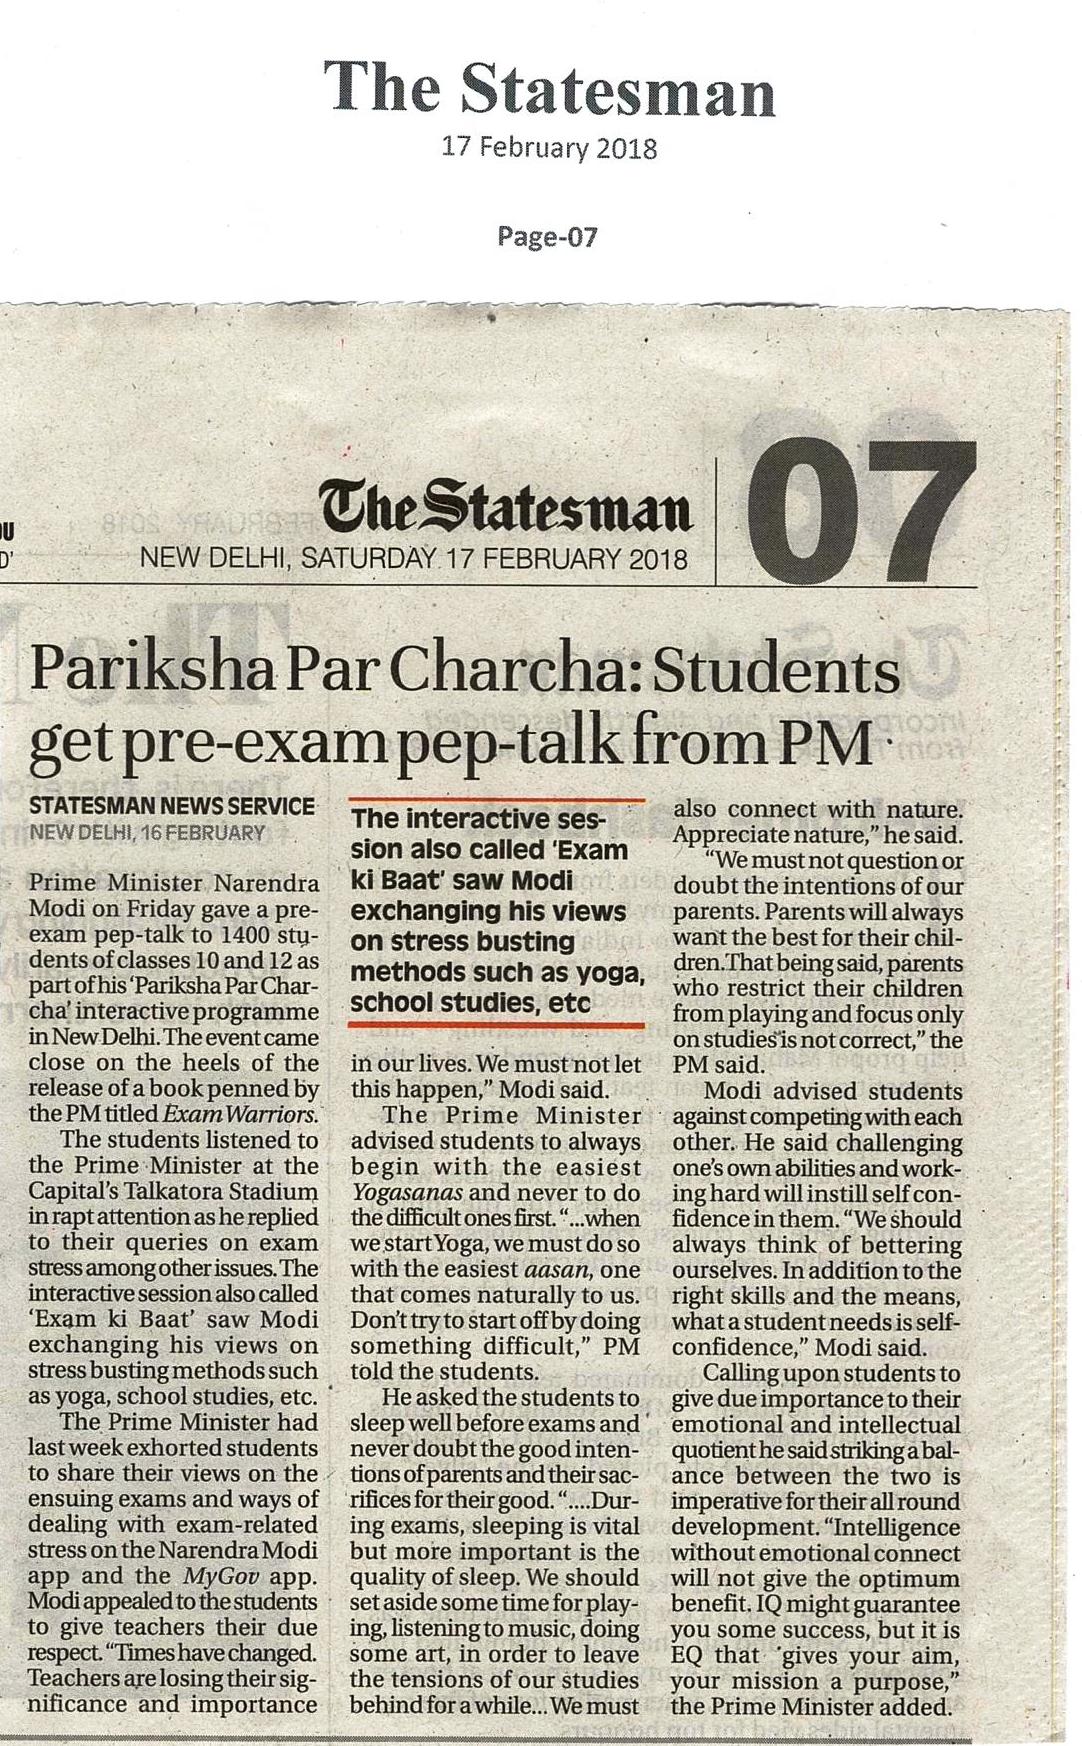 Pariksha Par Charcha: Students get Pre-Exam Prep Talk from PM